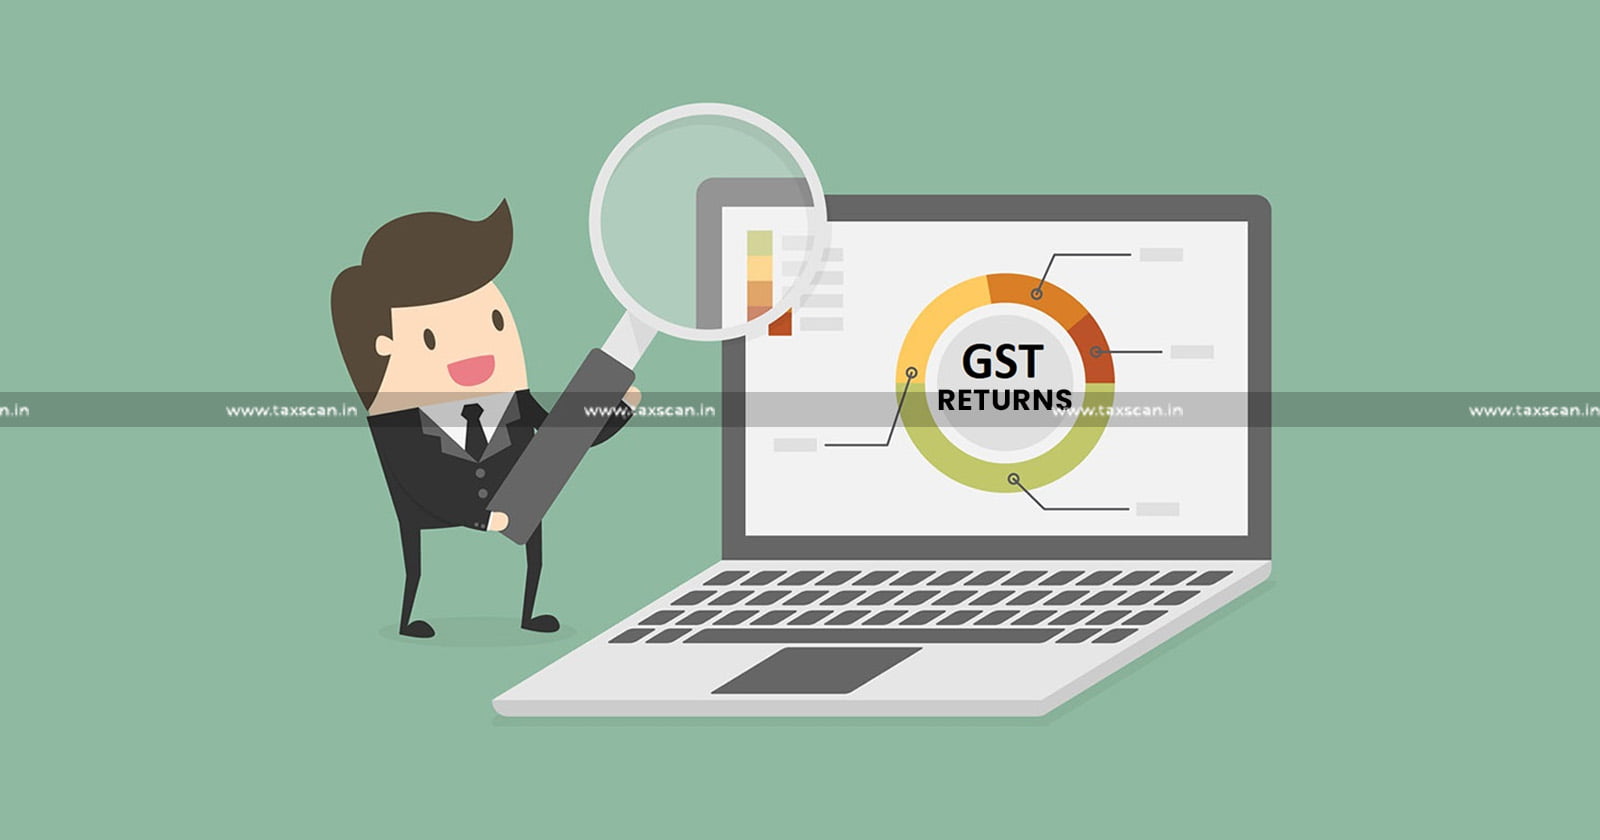 CBIC - Standard Operating Procedure - Scrutiny of GST Returns - Taxscan